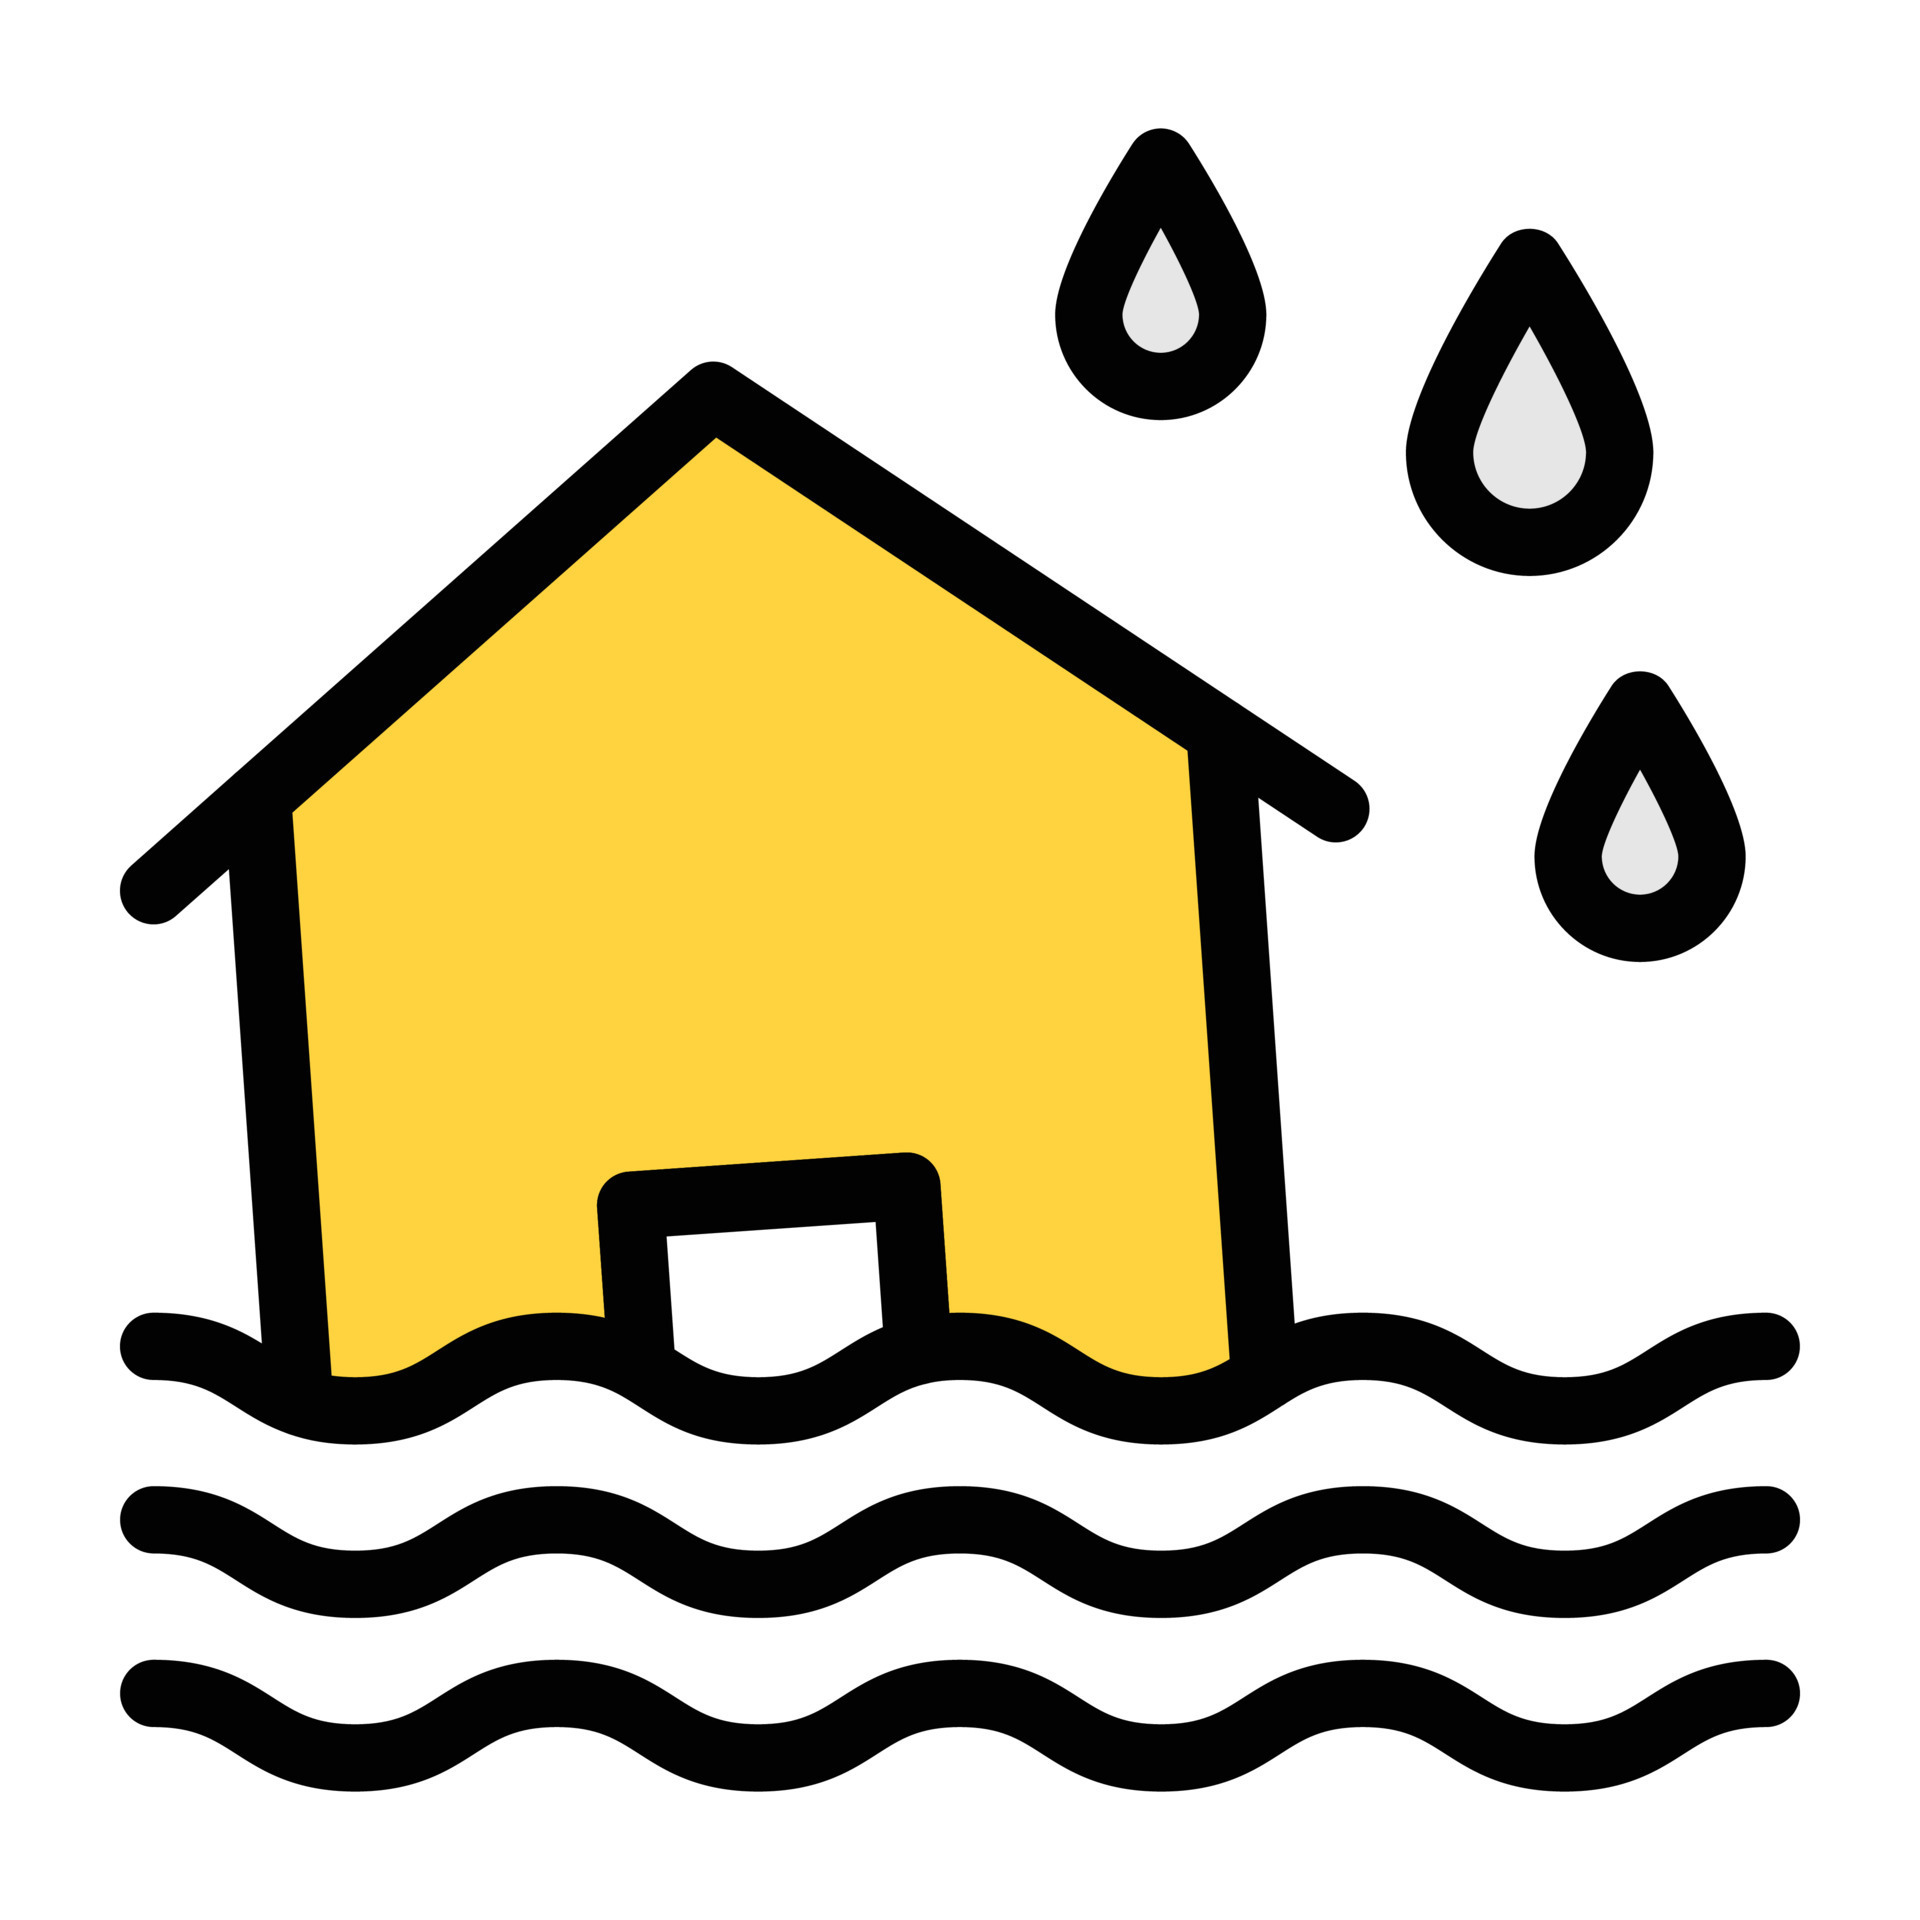 house flood vector illustration on a background.Premium quality symbols ...